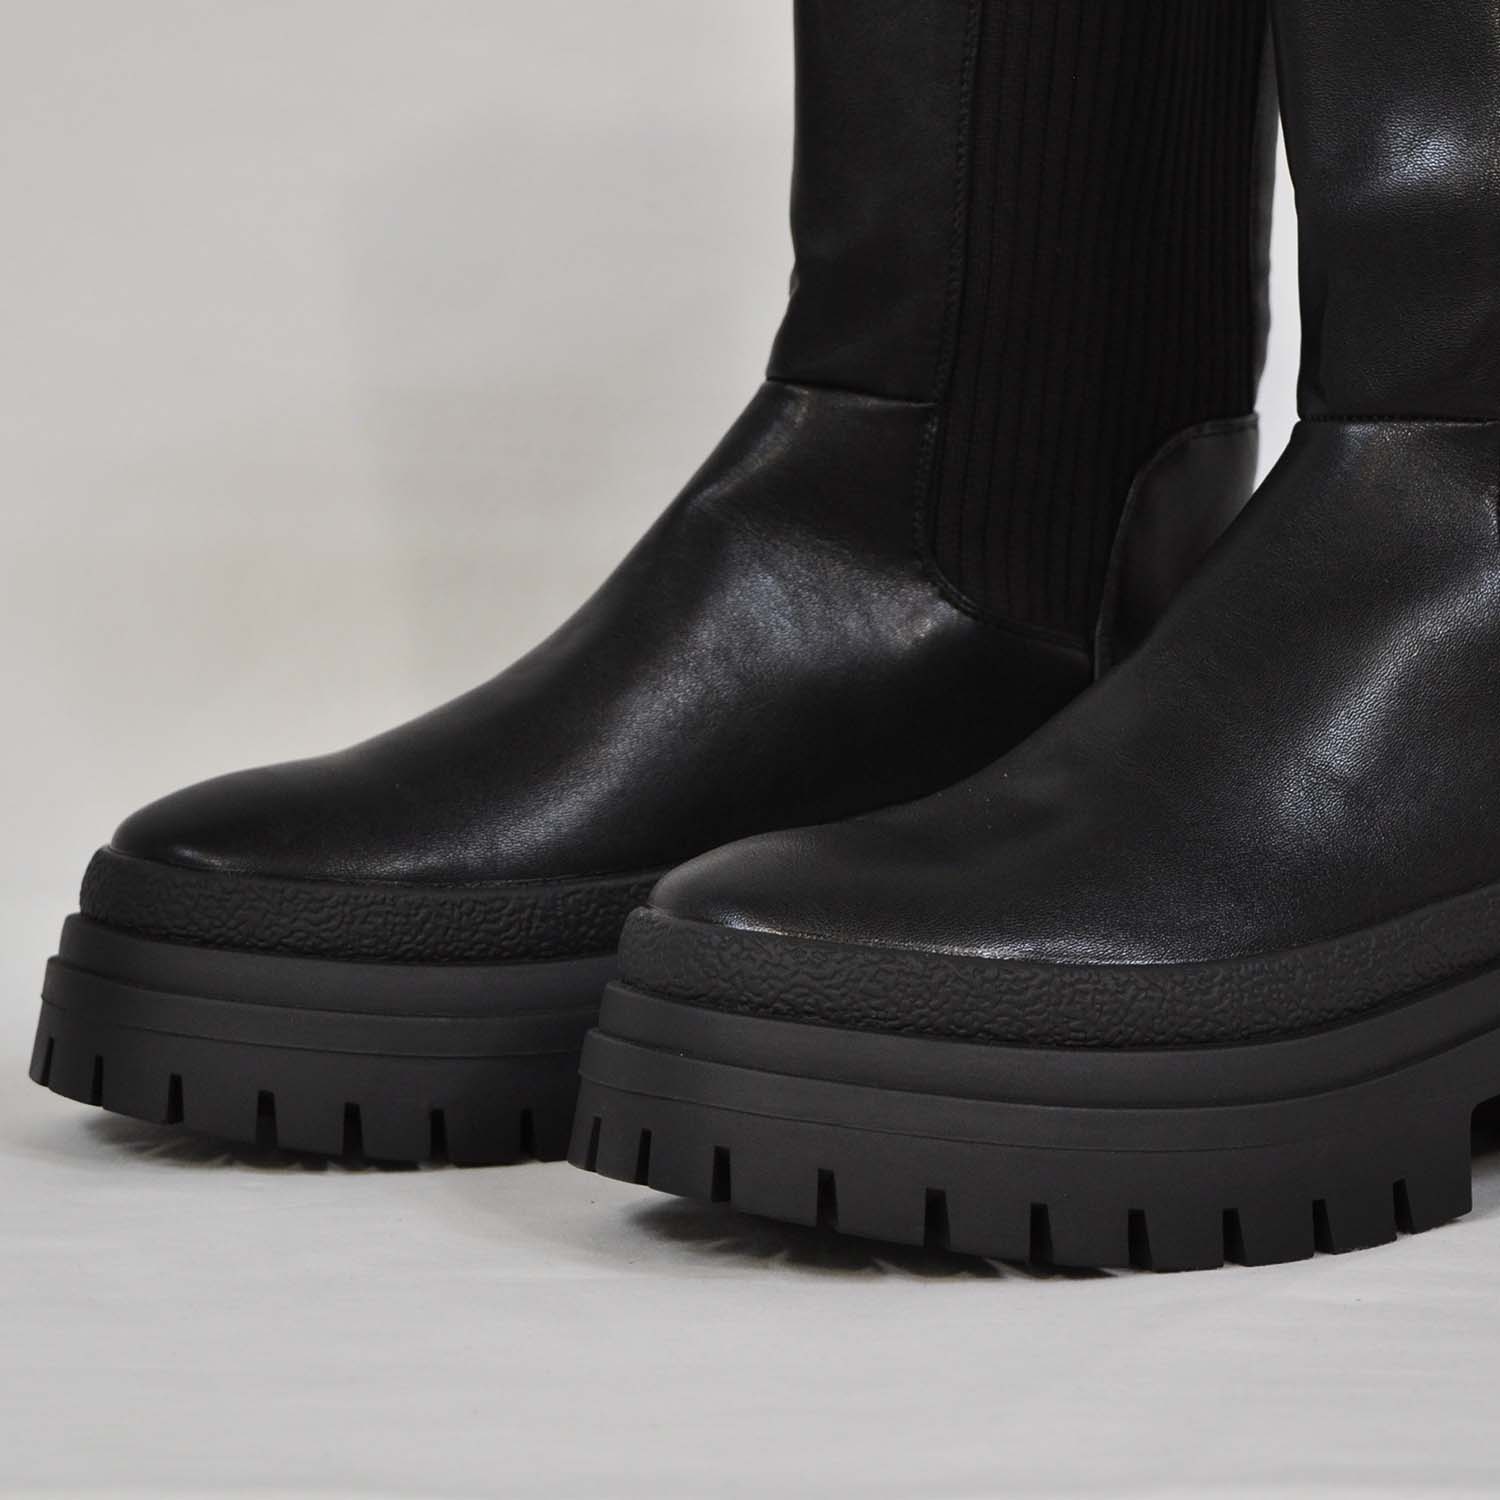 Black track boots